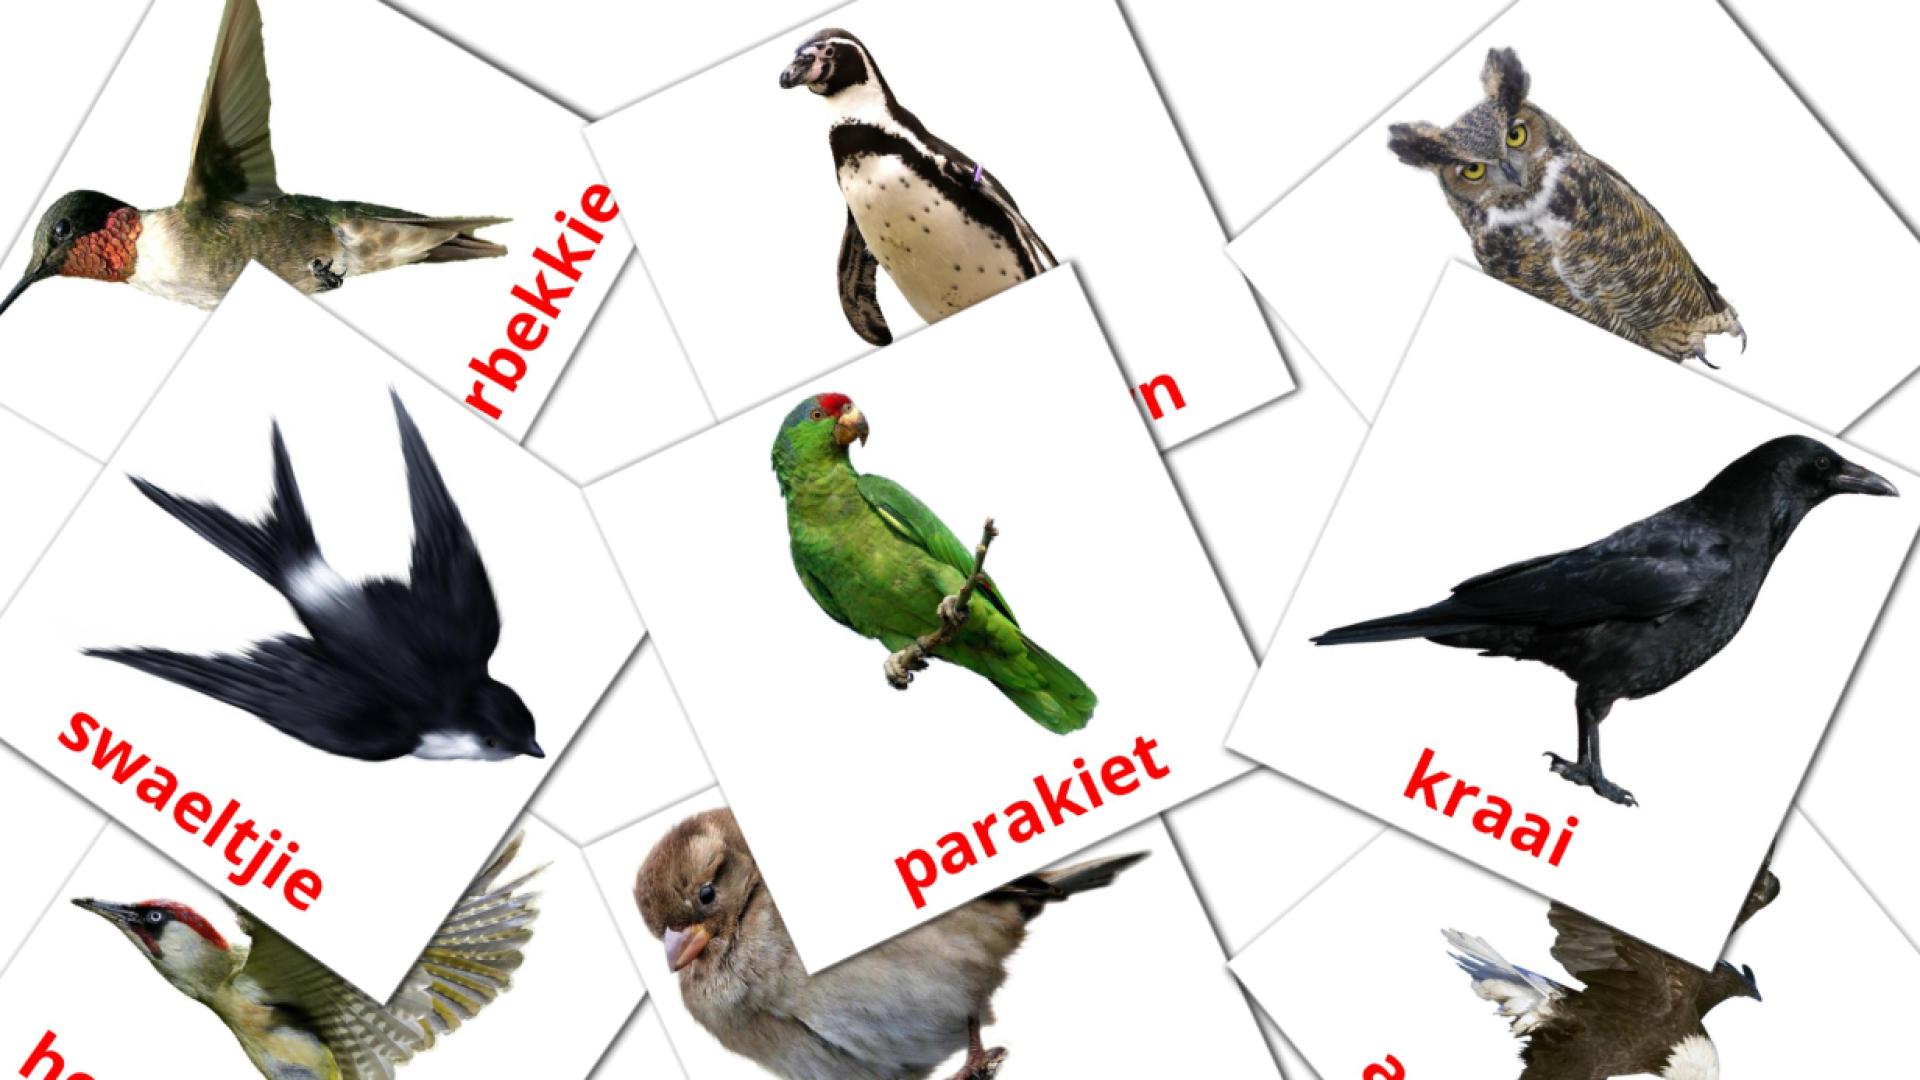 Uccelli selvaggi - Schede di vocabolario afrikaans